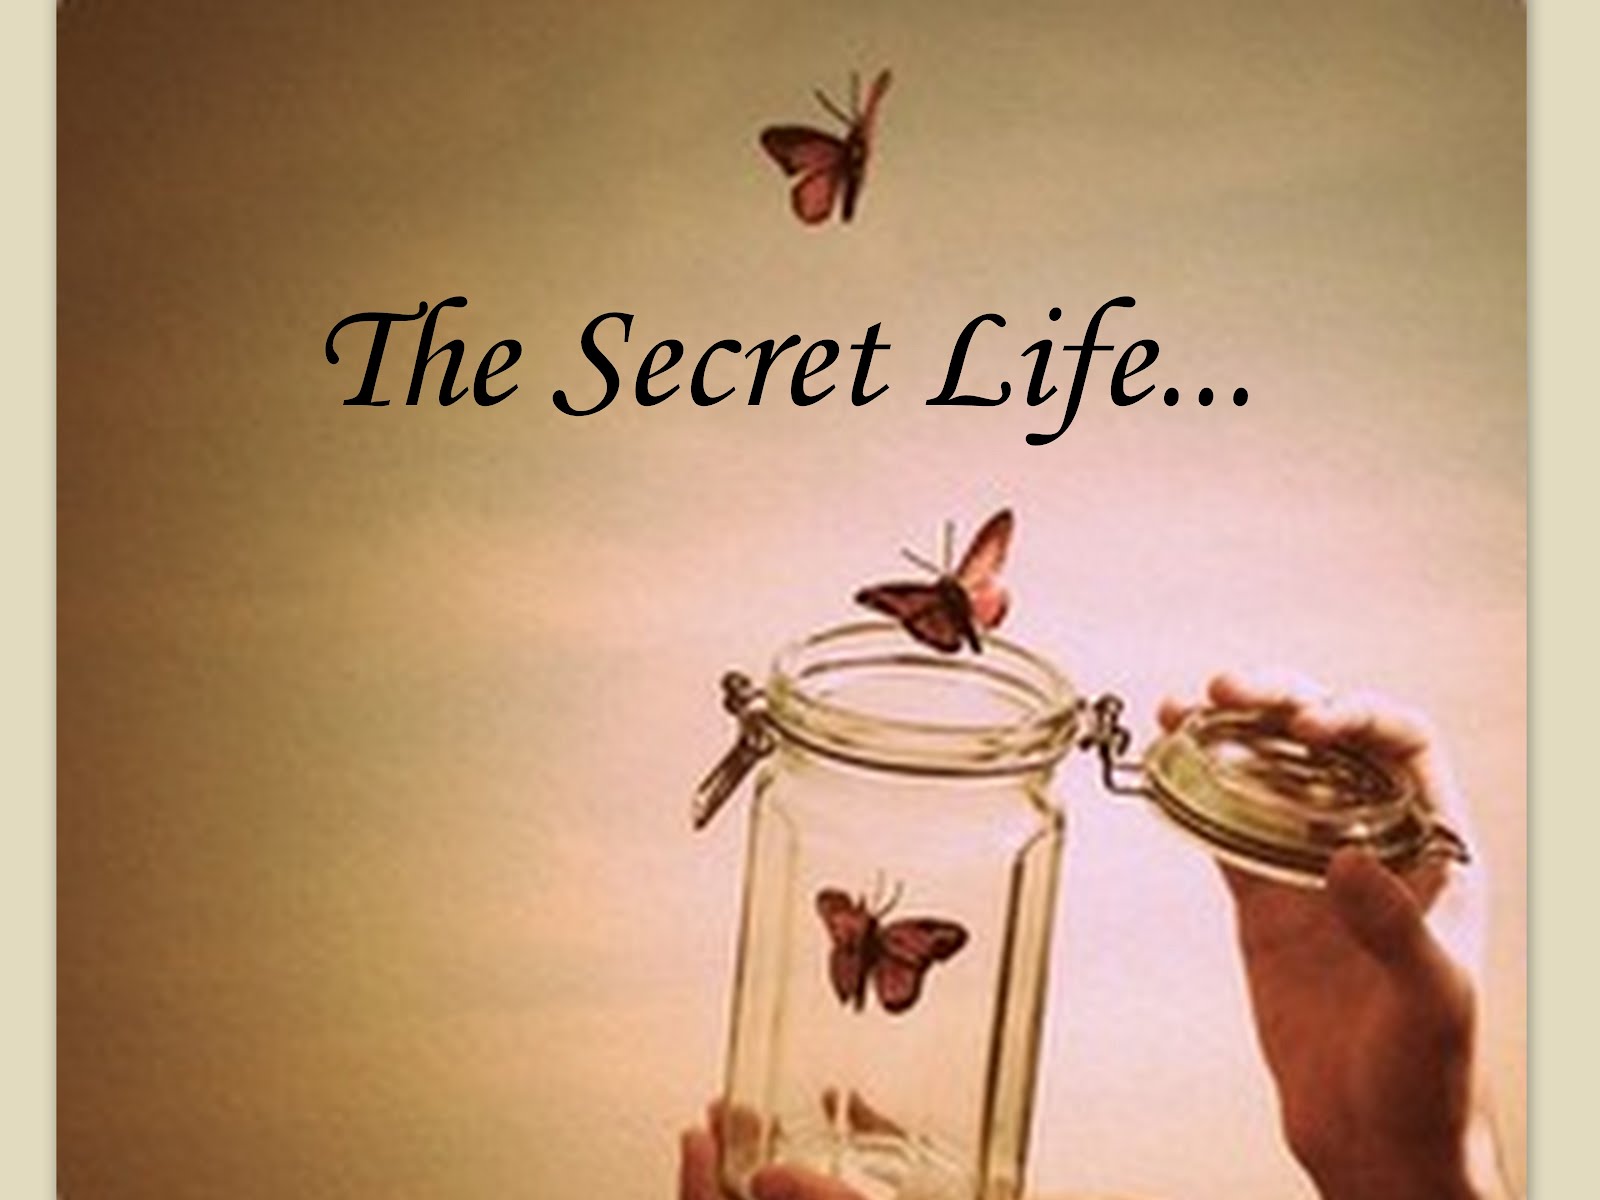 The Secret Life...